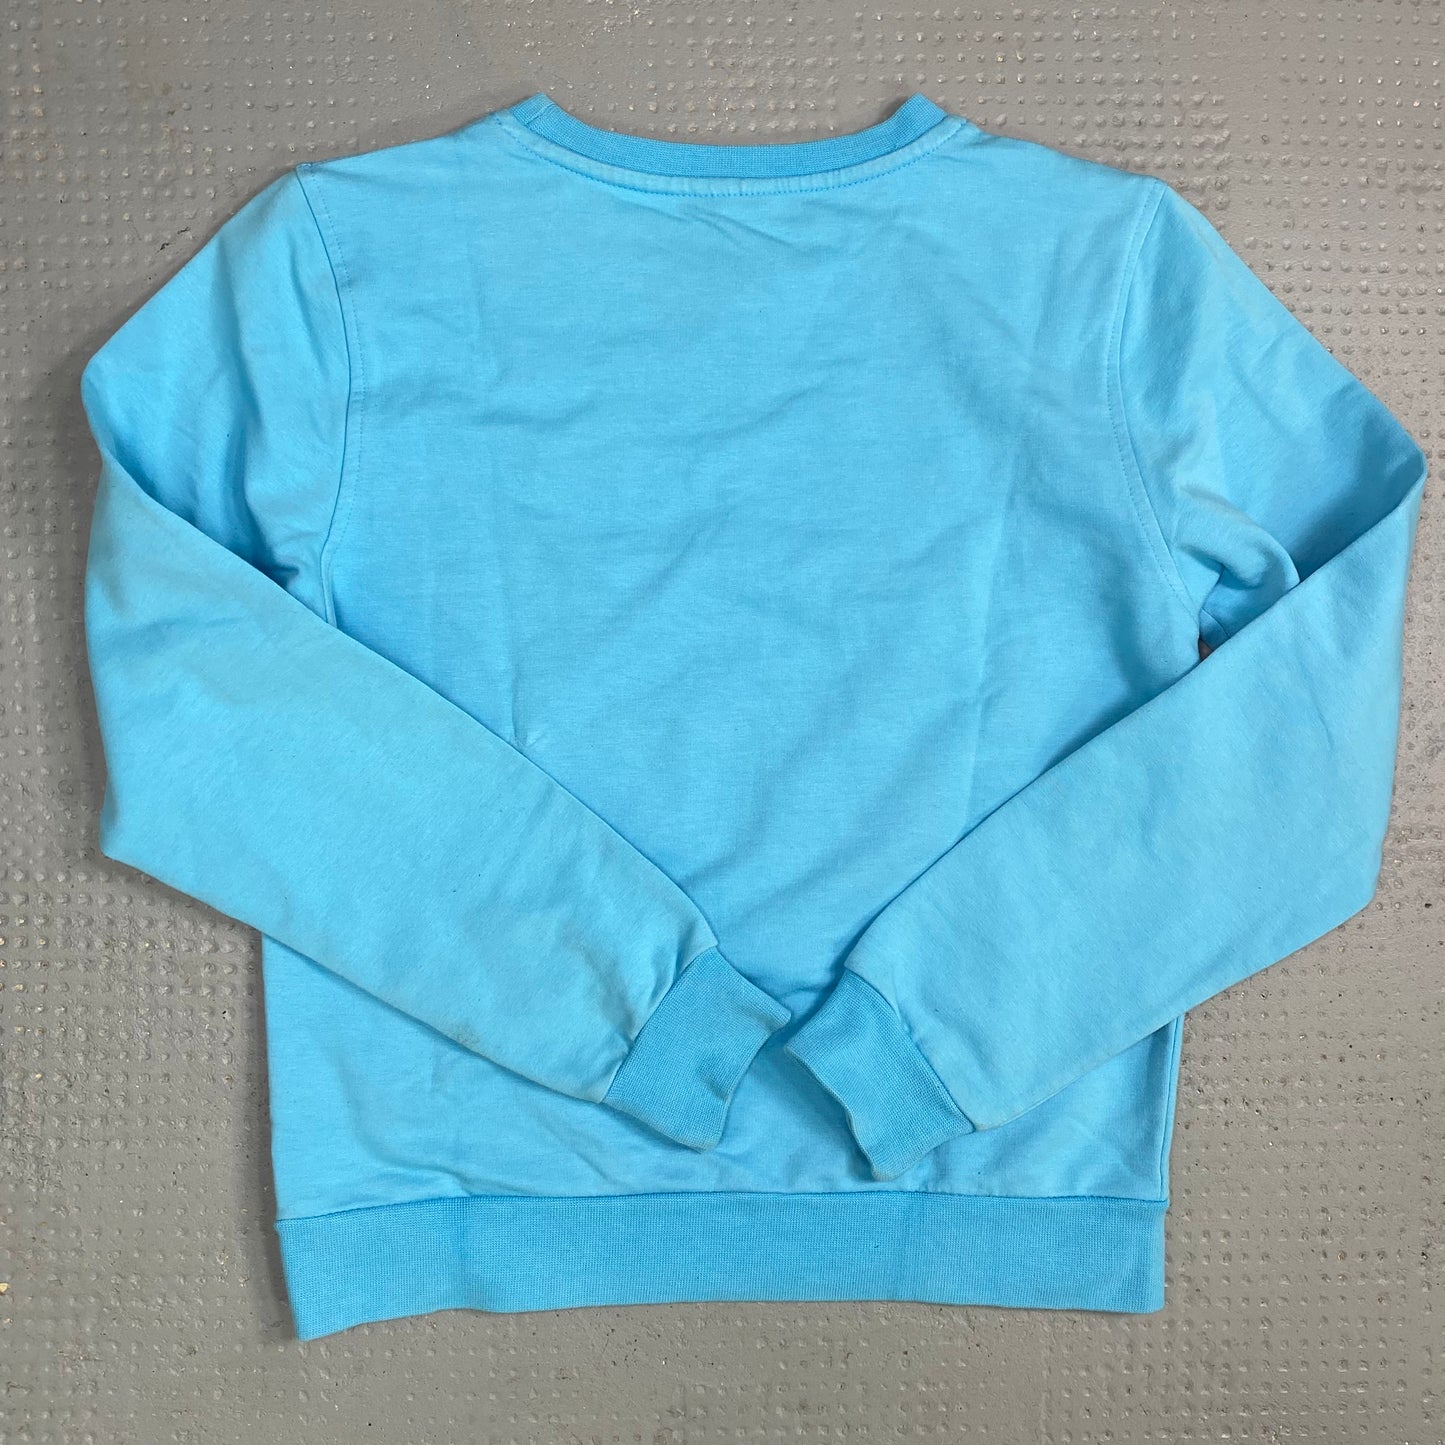 Vintage 2000's Playboy Downtown Girl Aqua Blue Sweater with White Brand Logo Print (S)